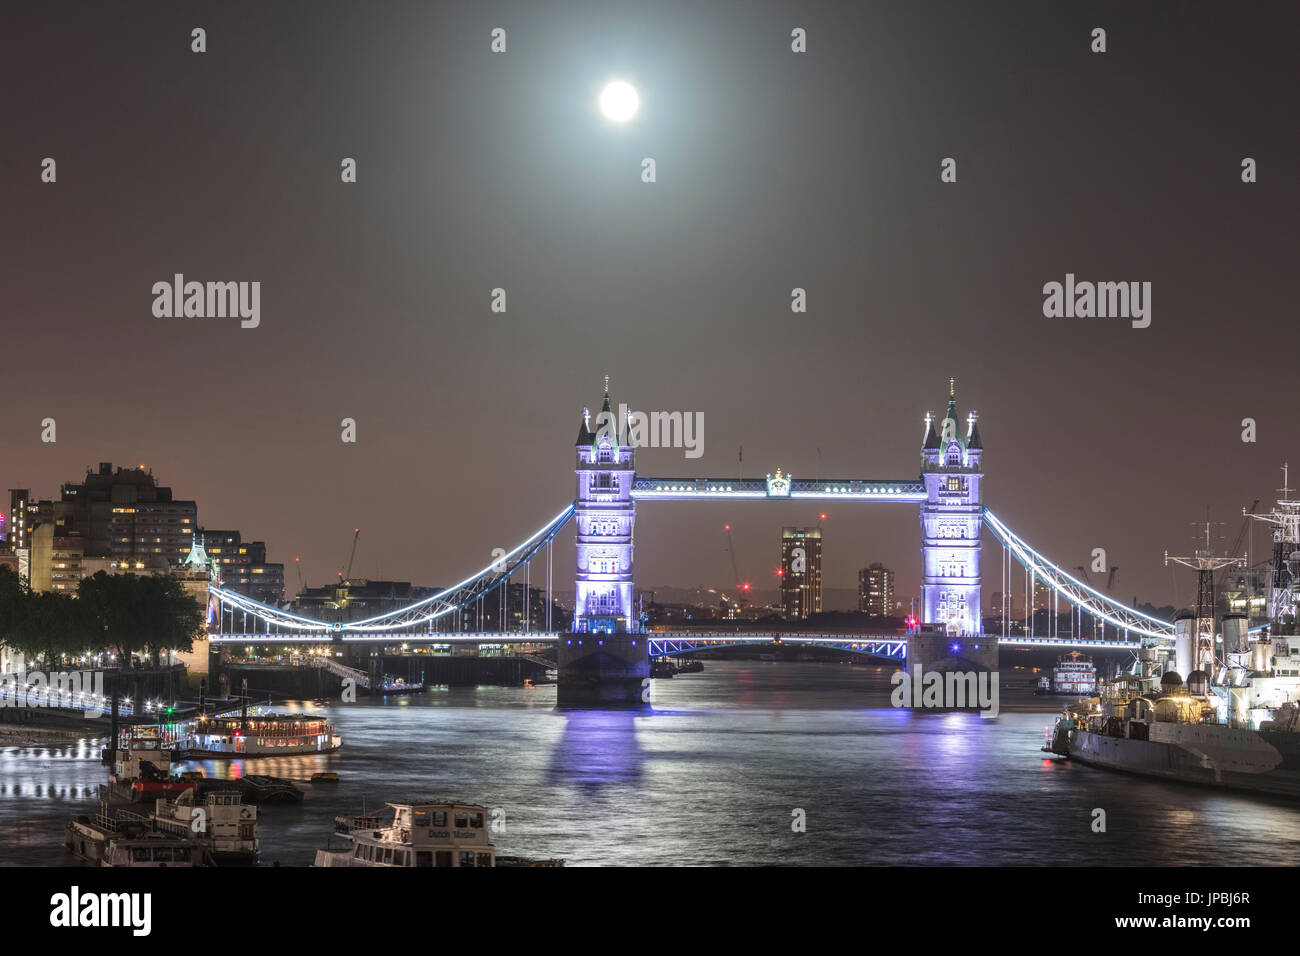 Full moon on the illuminated Tower Bridge reflected in river Thames London United Kingdom Stock Photo